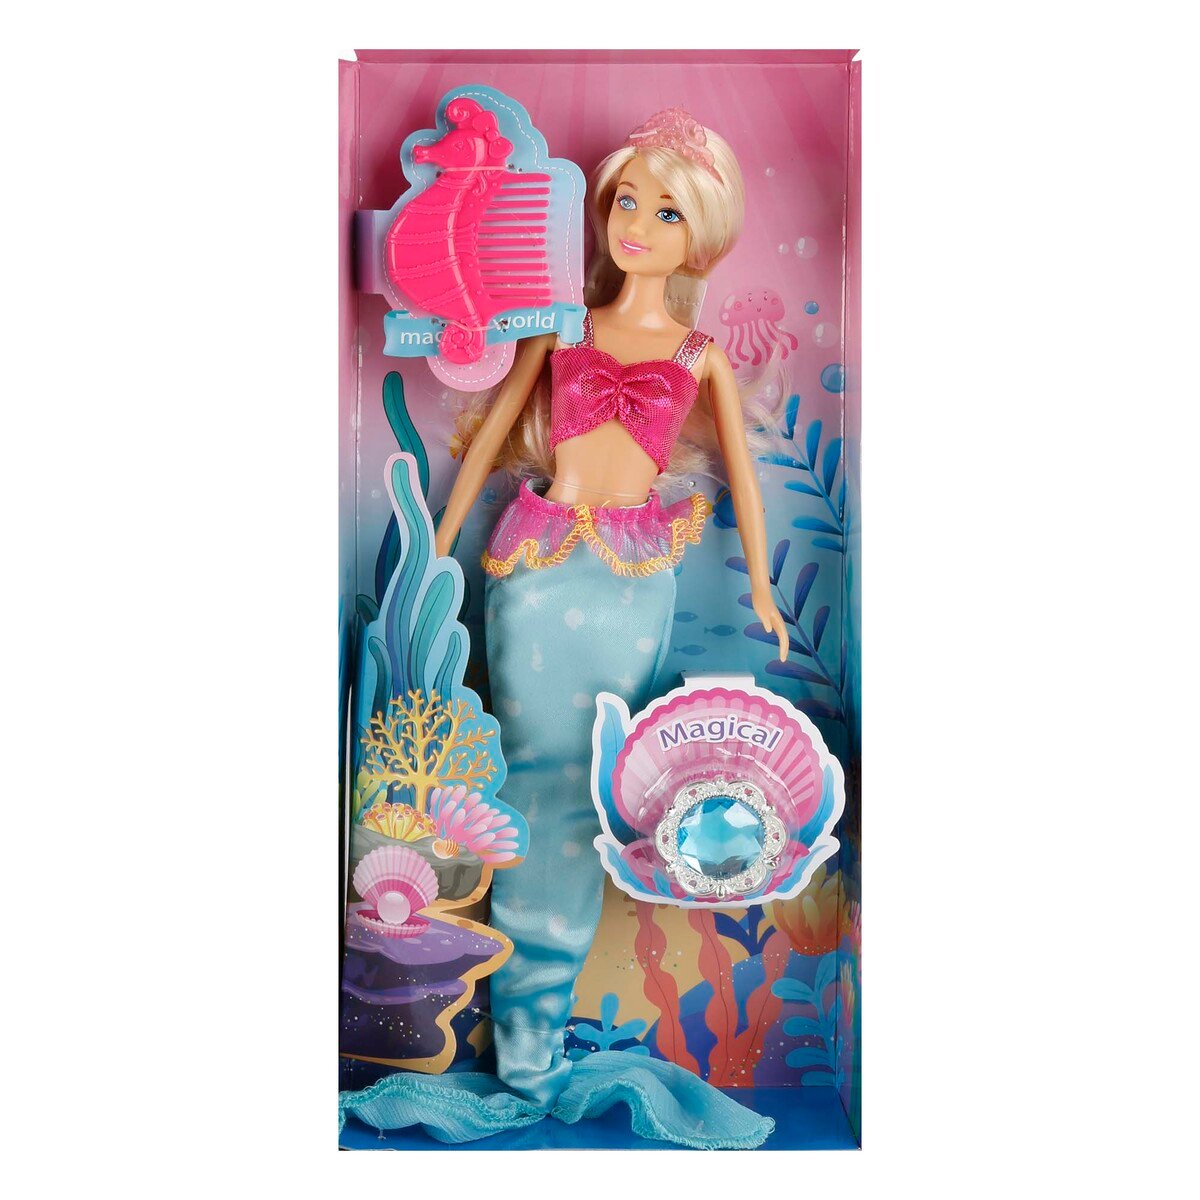 Fabiola Mermaid Magical Underwater World Doll with Accessory, 99291